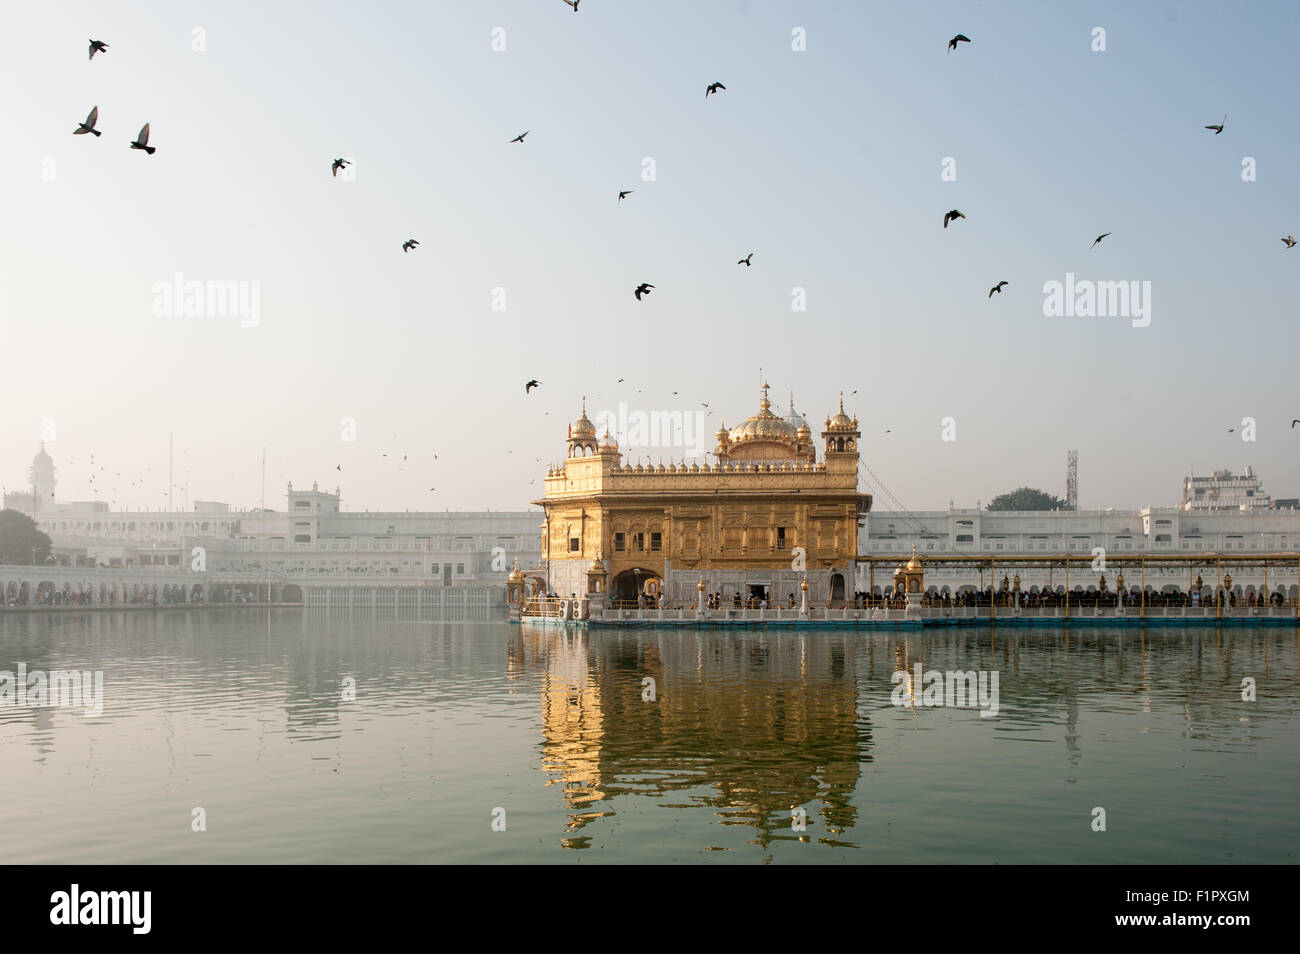 Amritsar, Punjab, Indien. Der Goldene Tempel - Harmandir Sahib - im Morgengrauen mit fliegenden Tauben; Amrit Sarovar Pool. Stockfoto